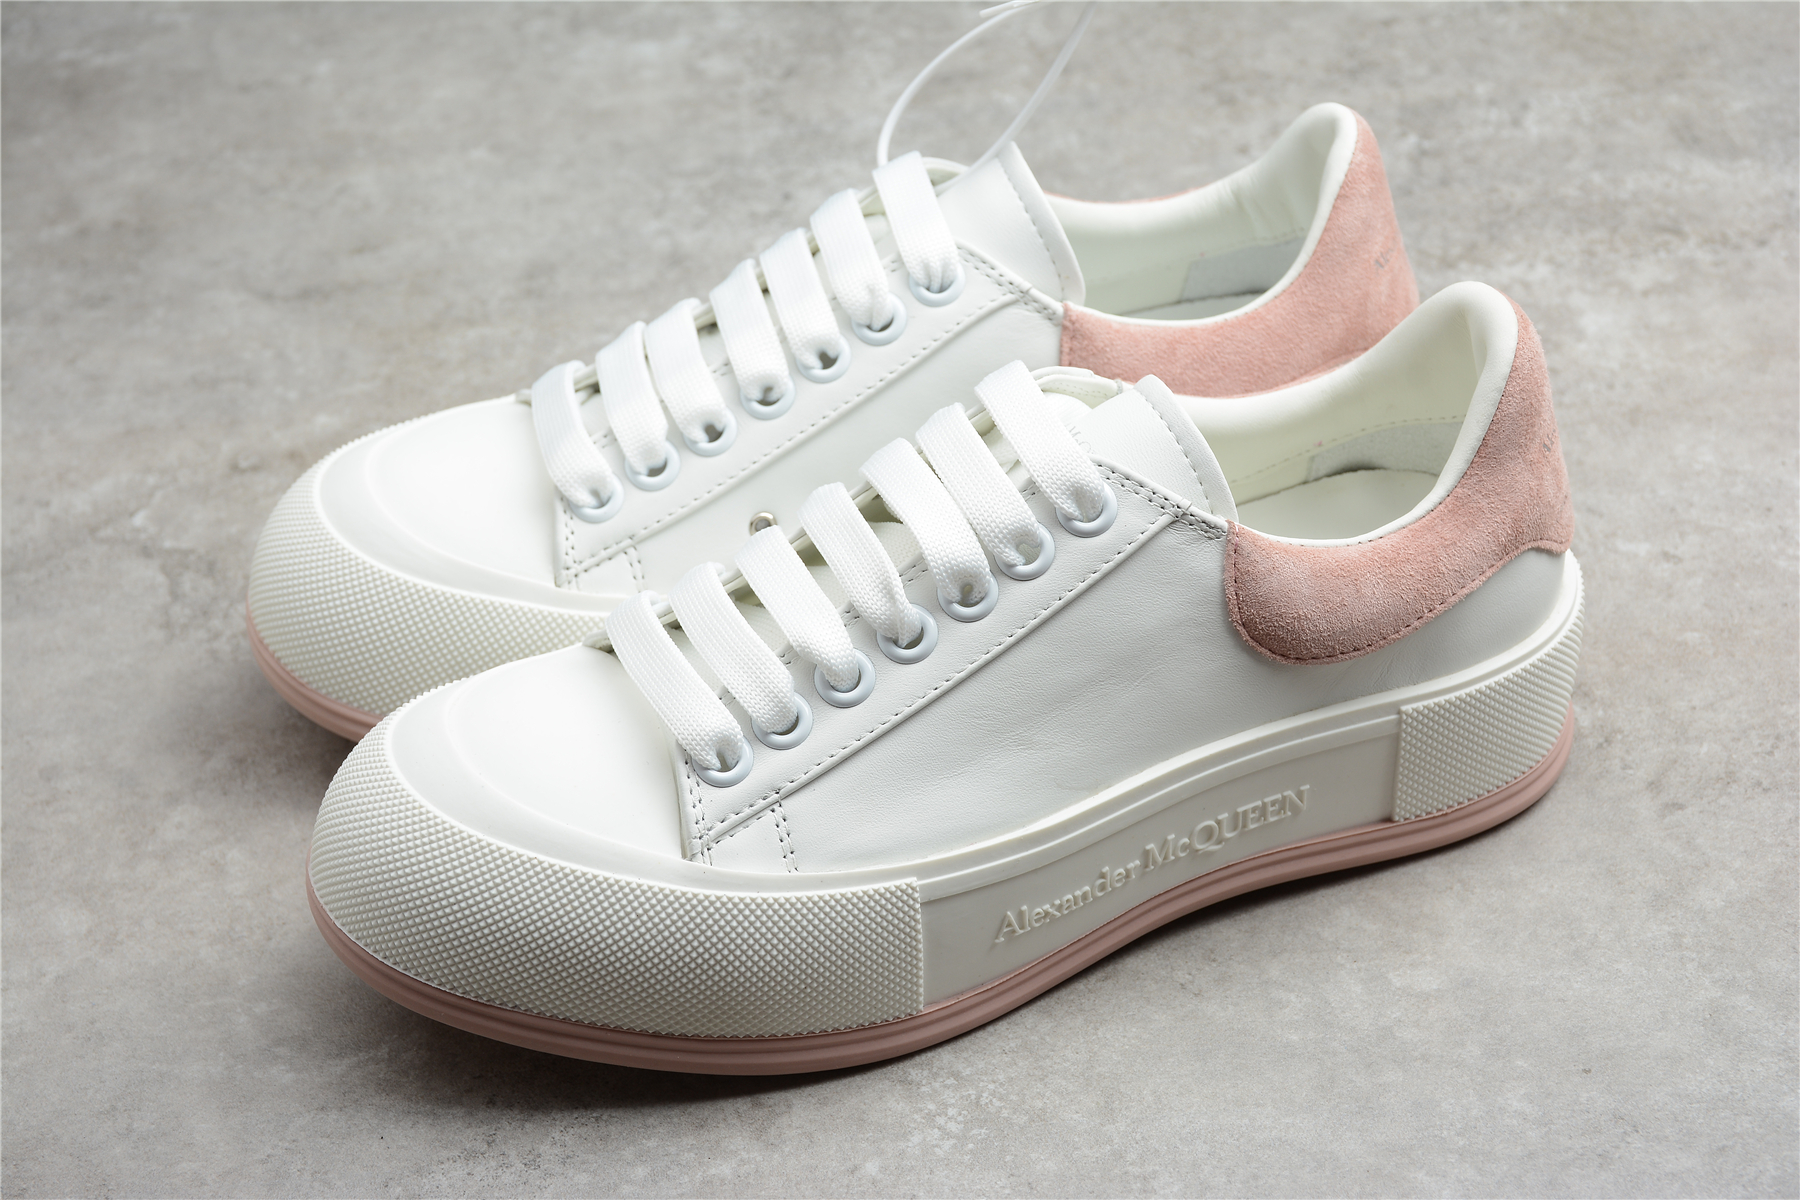 Alex McQ  women sneakers white pink low heel